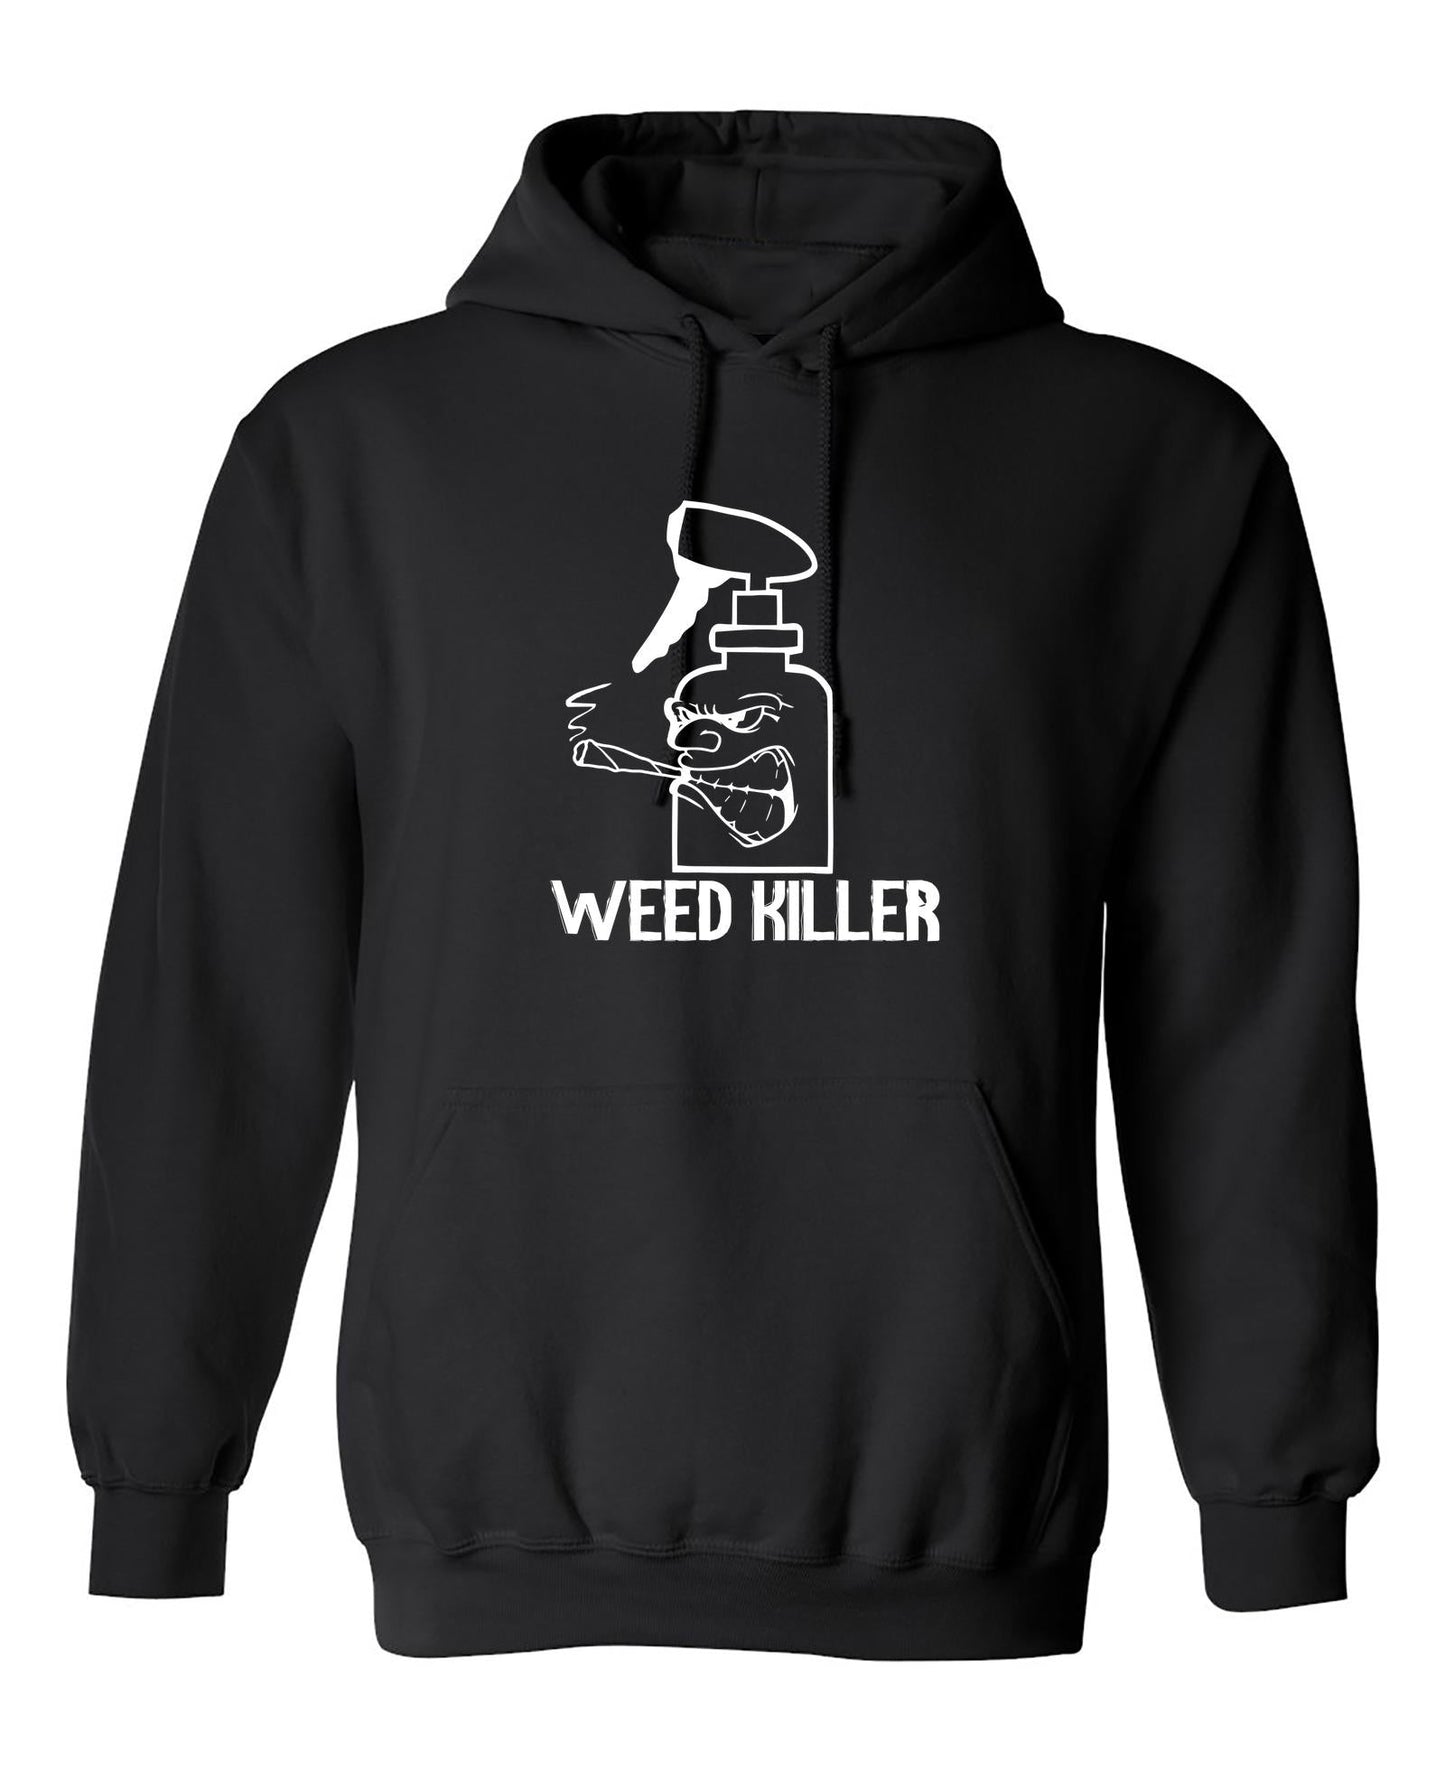 Funny T-Shirts design "Weed Killer"